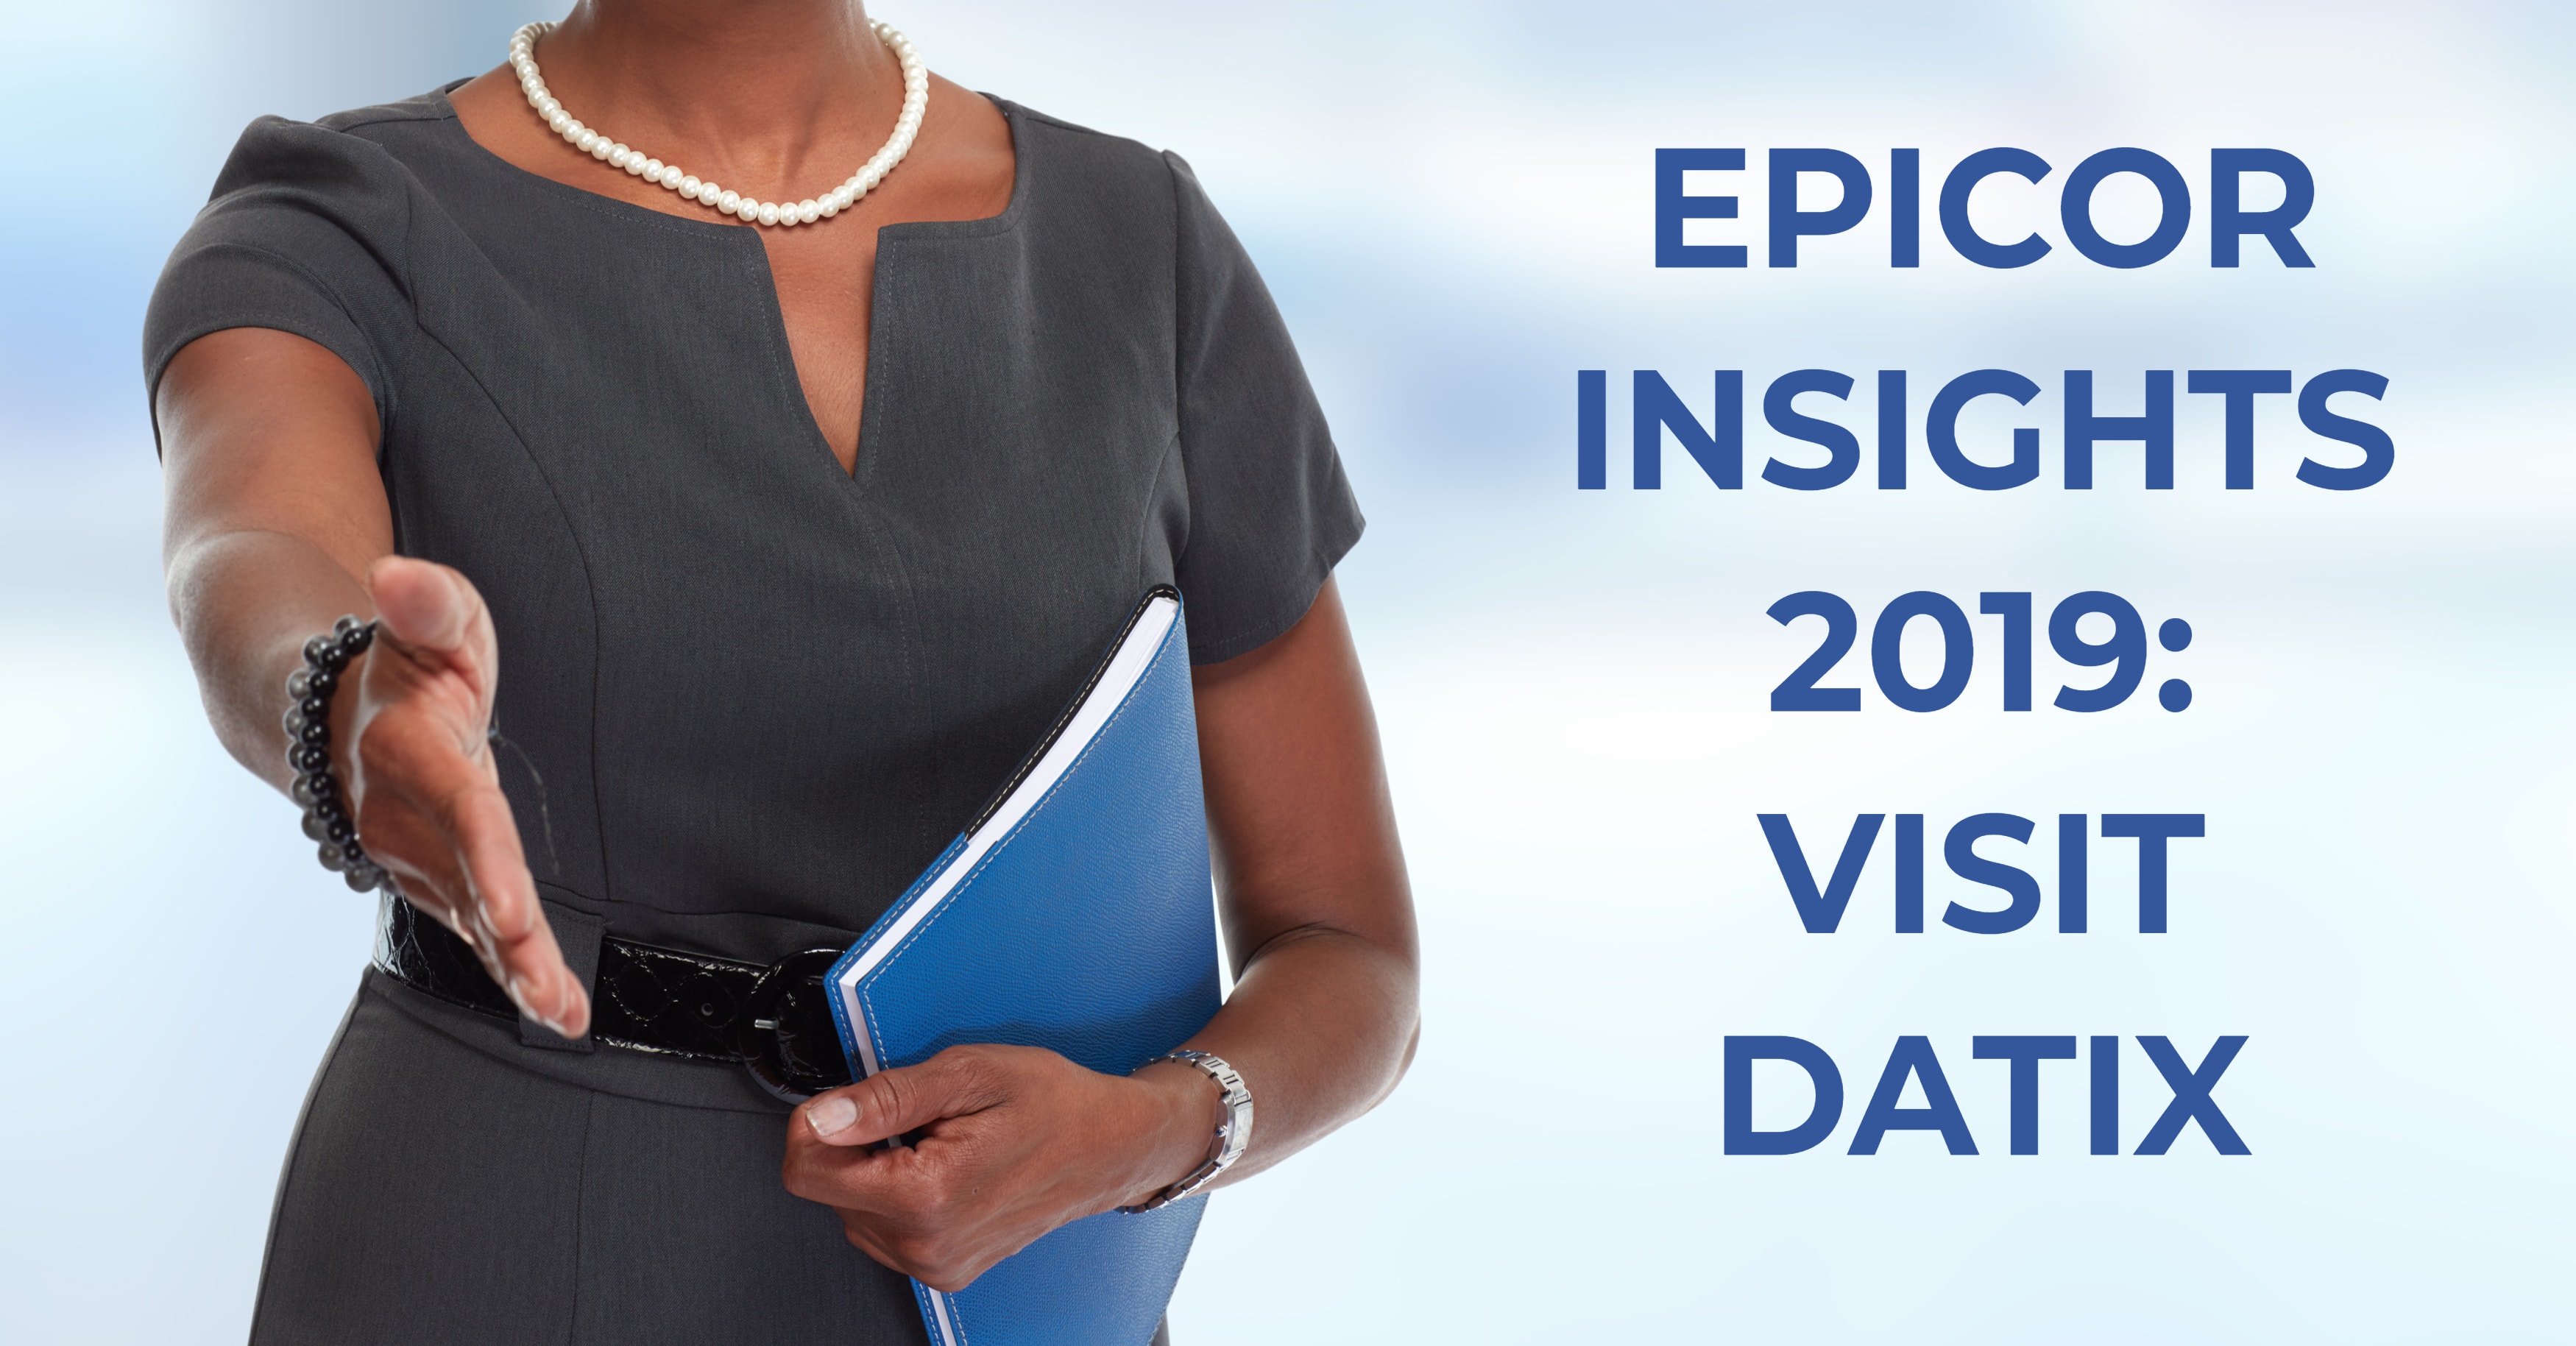 Epicor Insights 2019